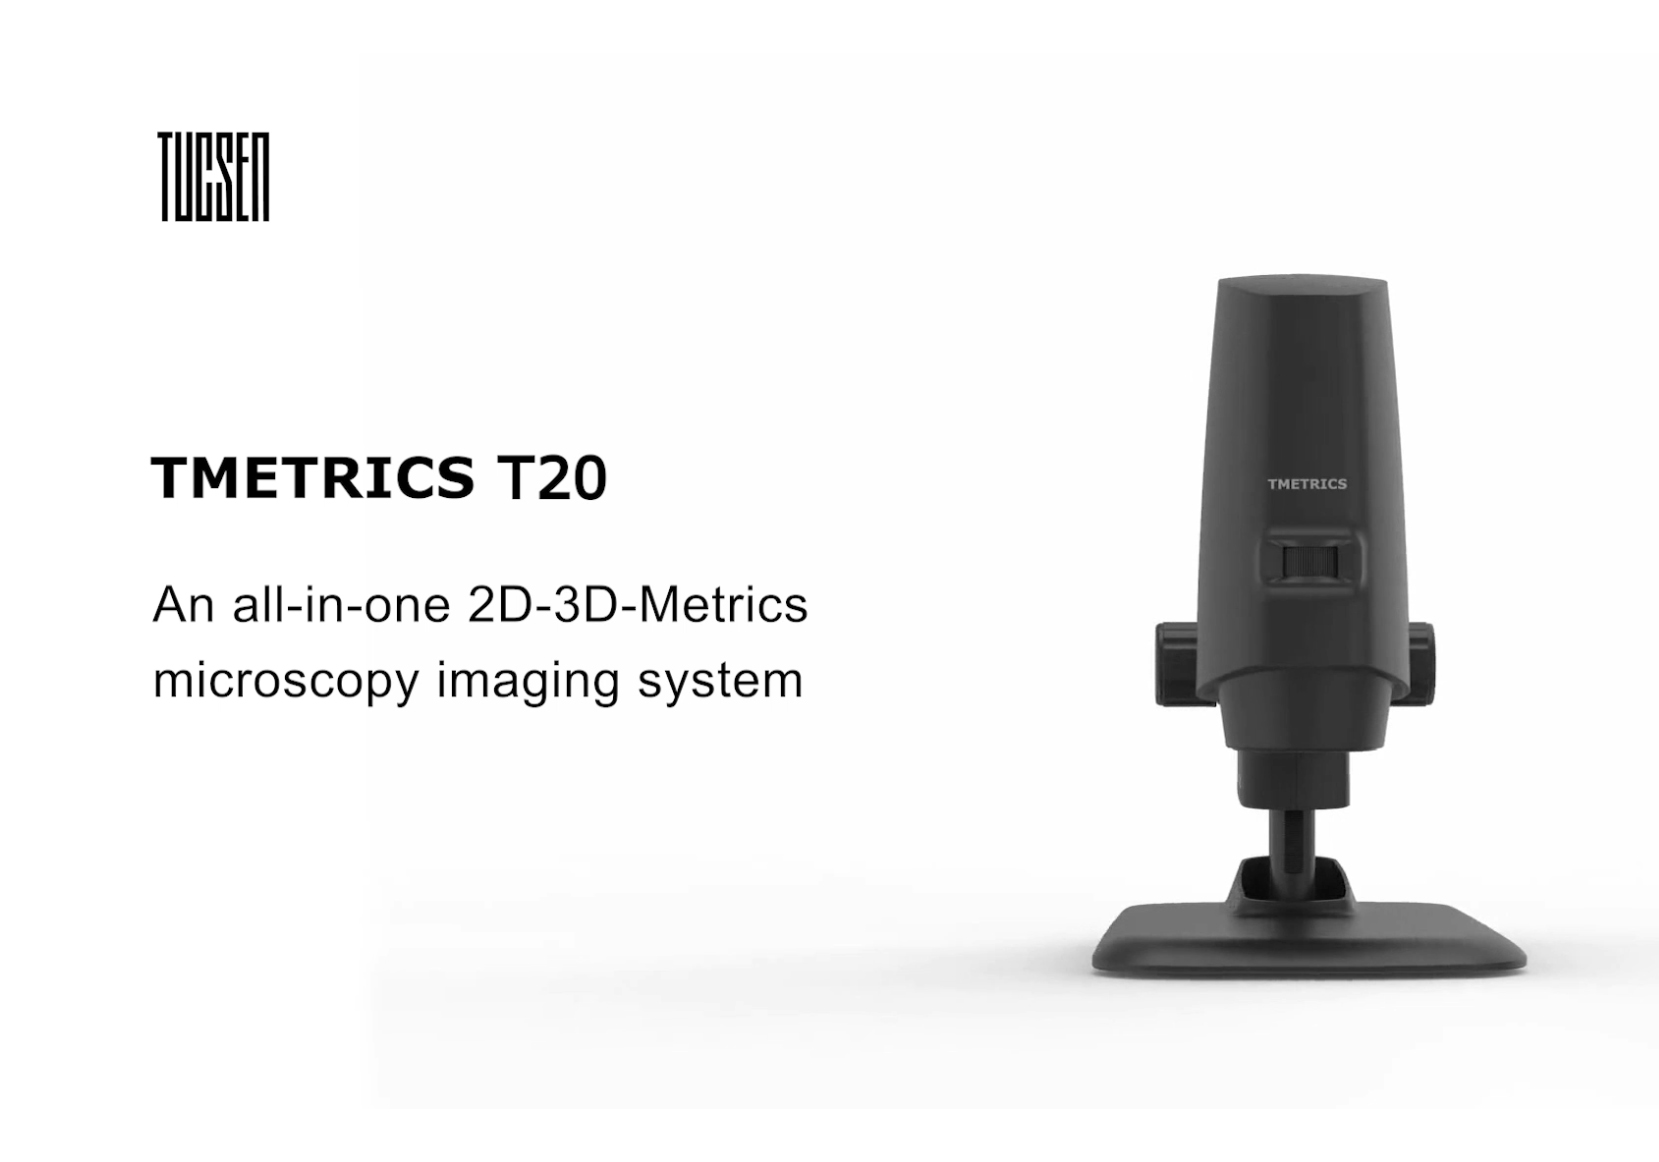 3D-Super Depth of Field Microscope